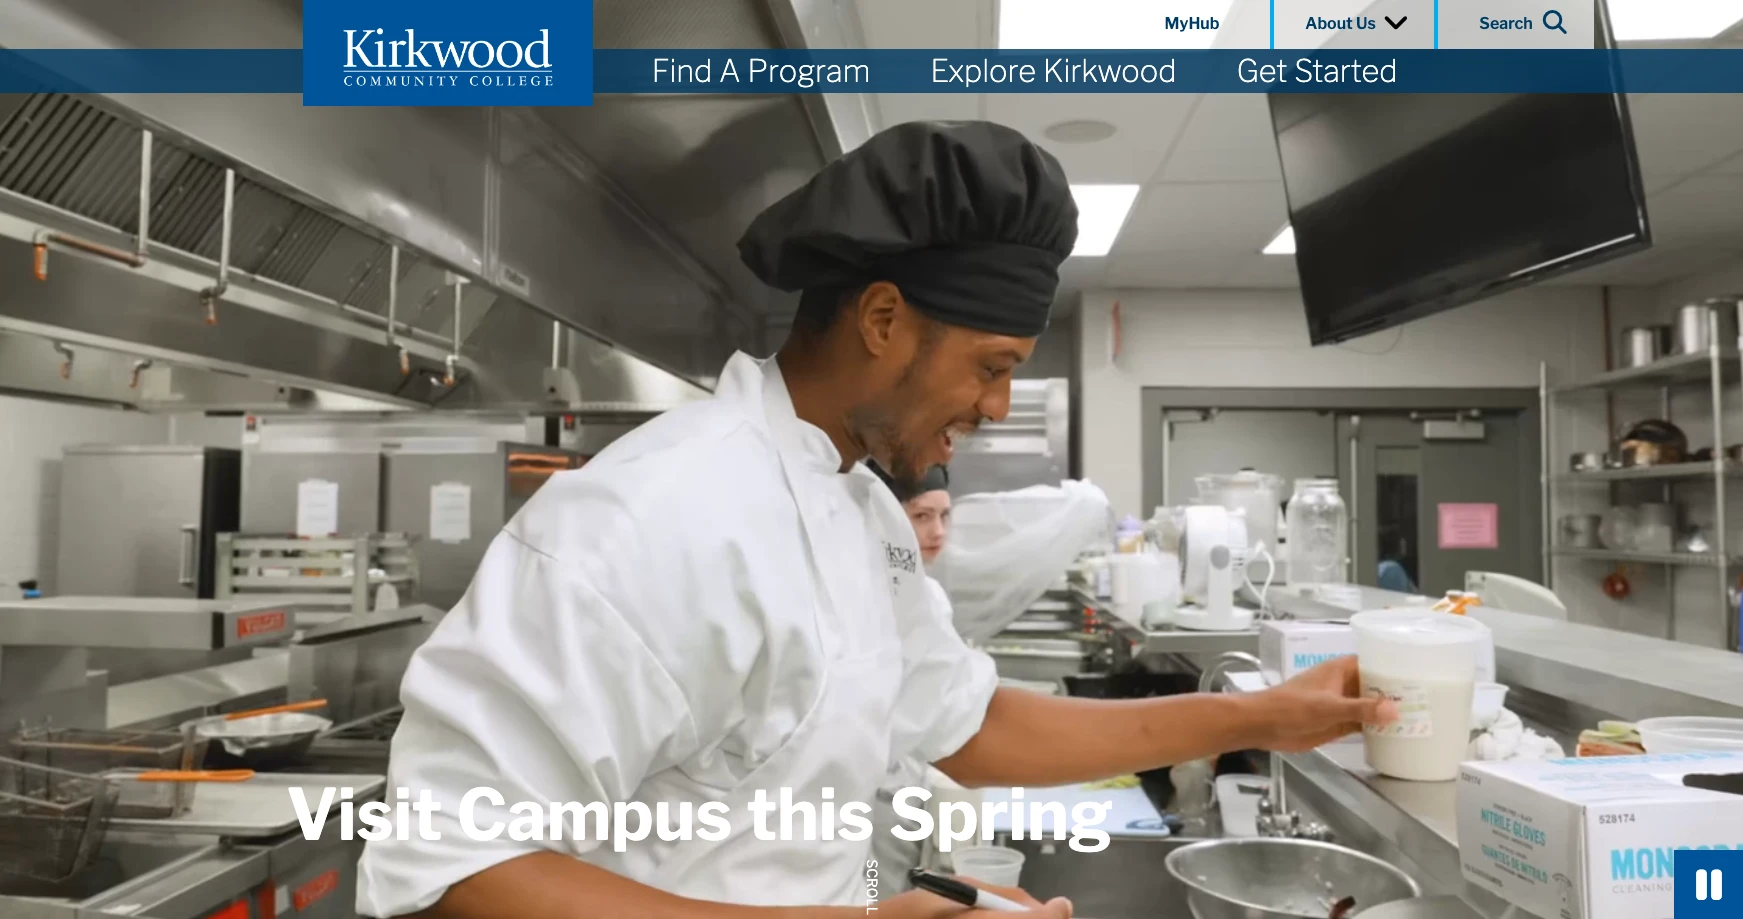 kirkwood community college homepage screenshot